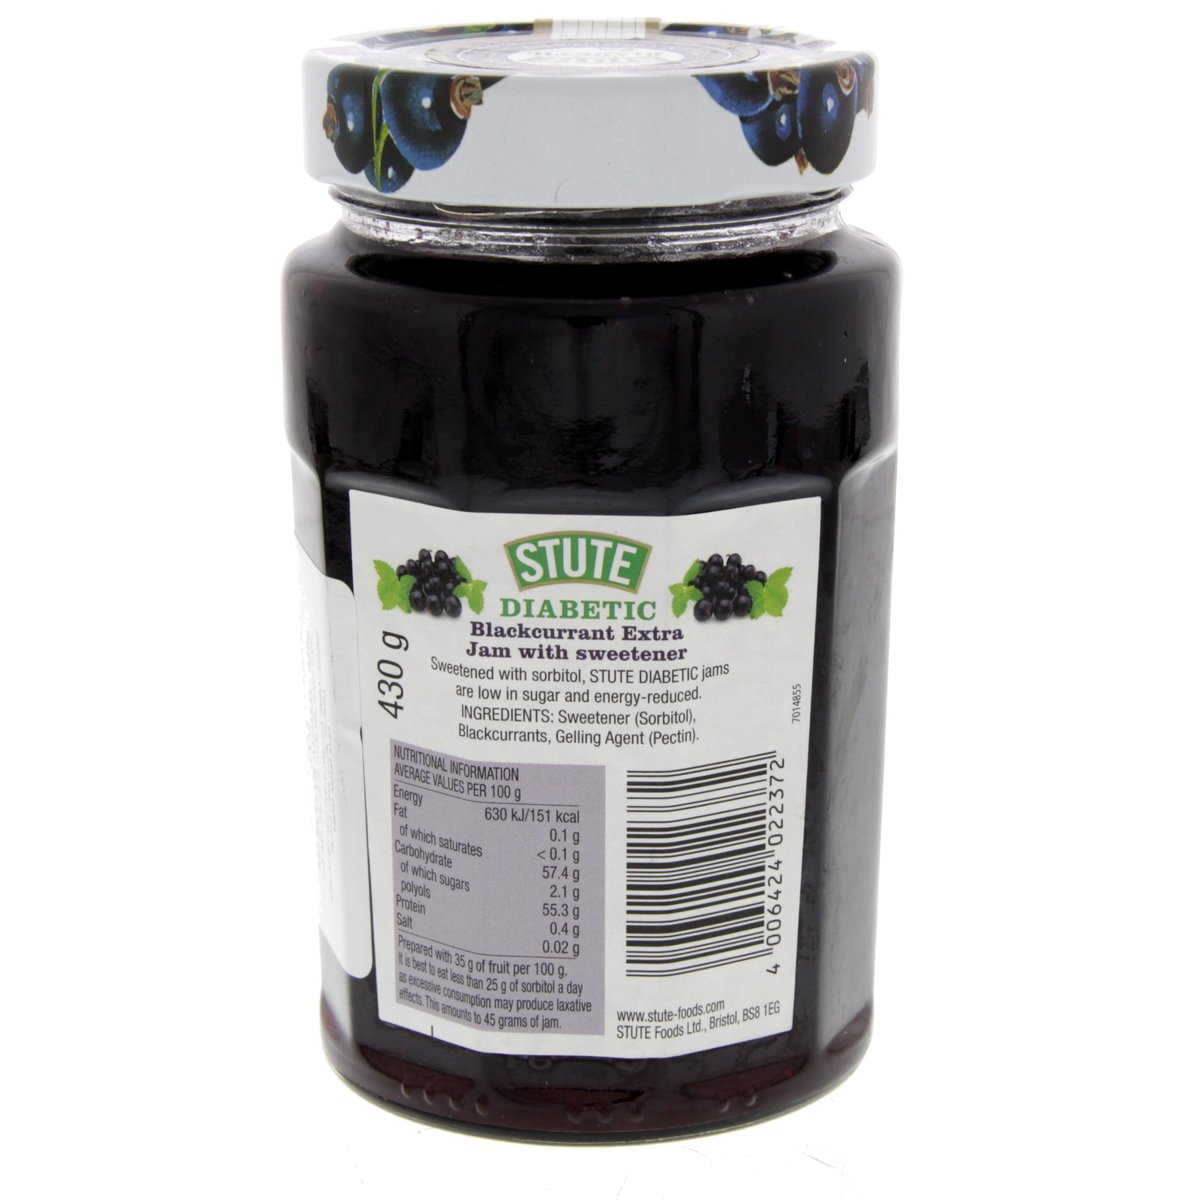 Stute Diabetic Blackcurrant Extra Jam 430 g